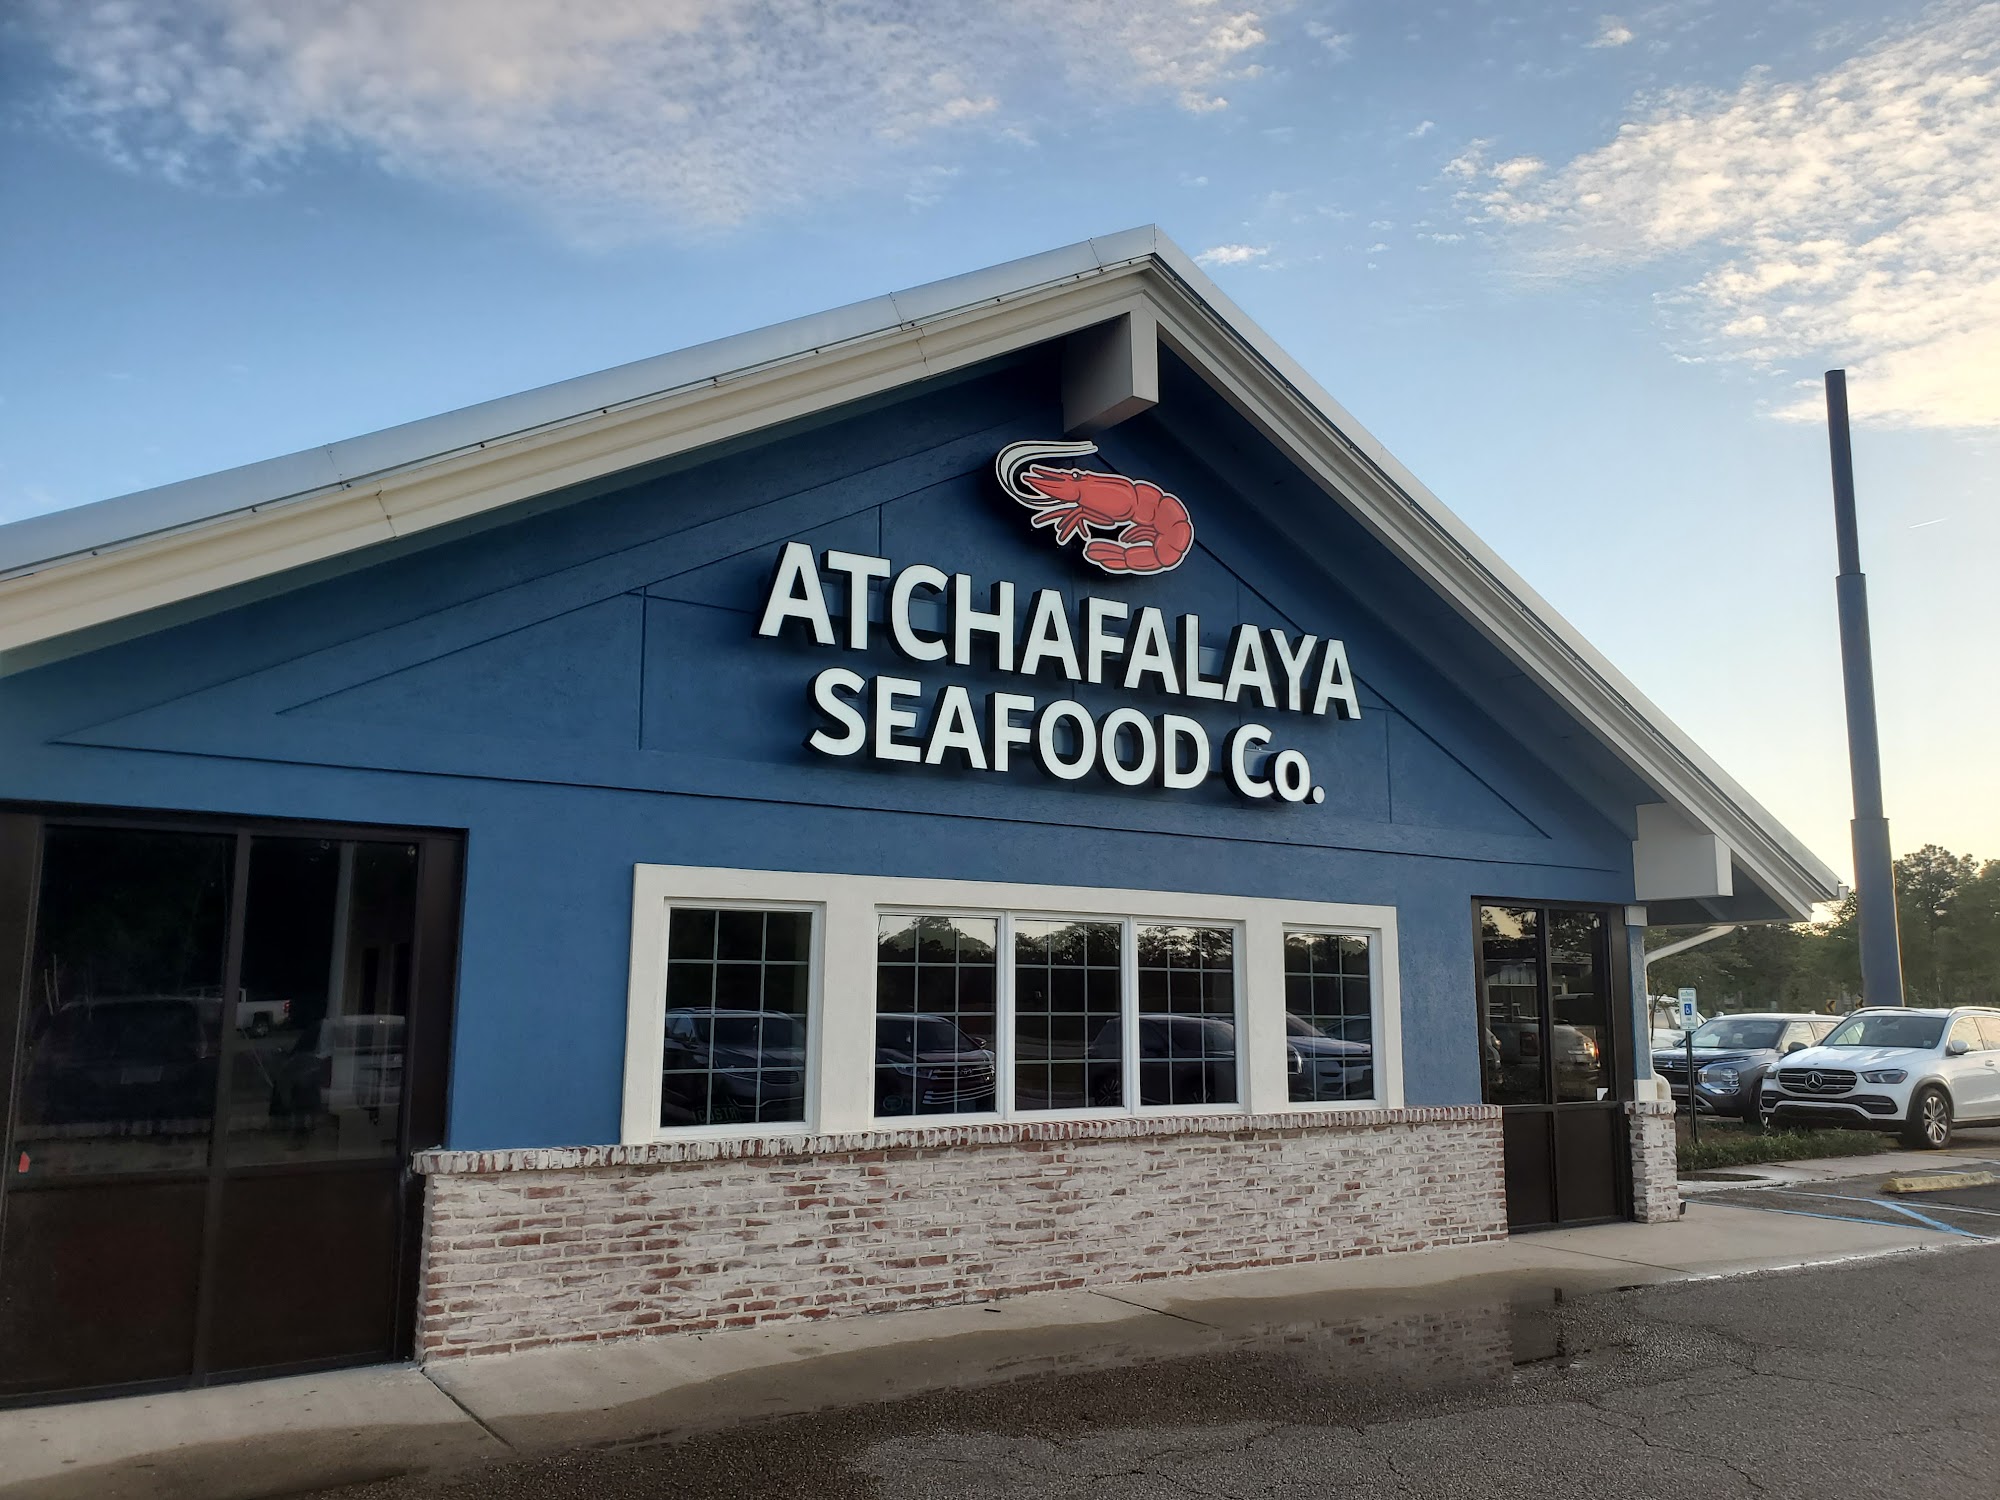 Atchafalaya Seafood Company